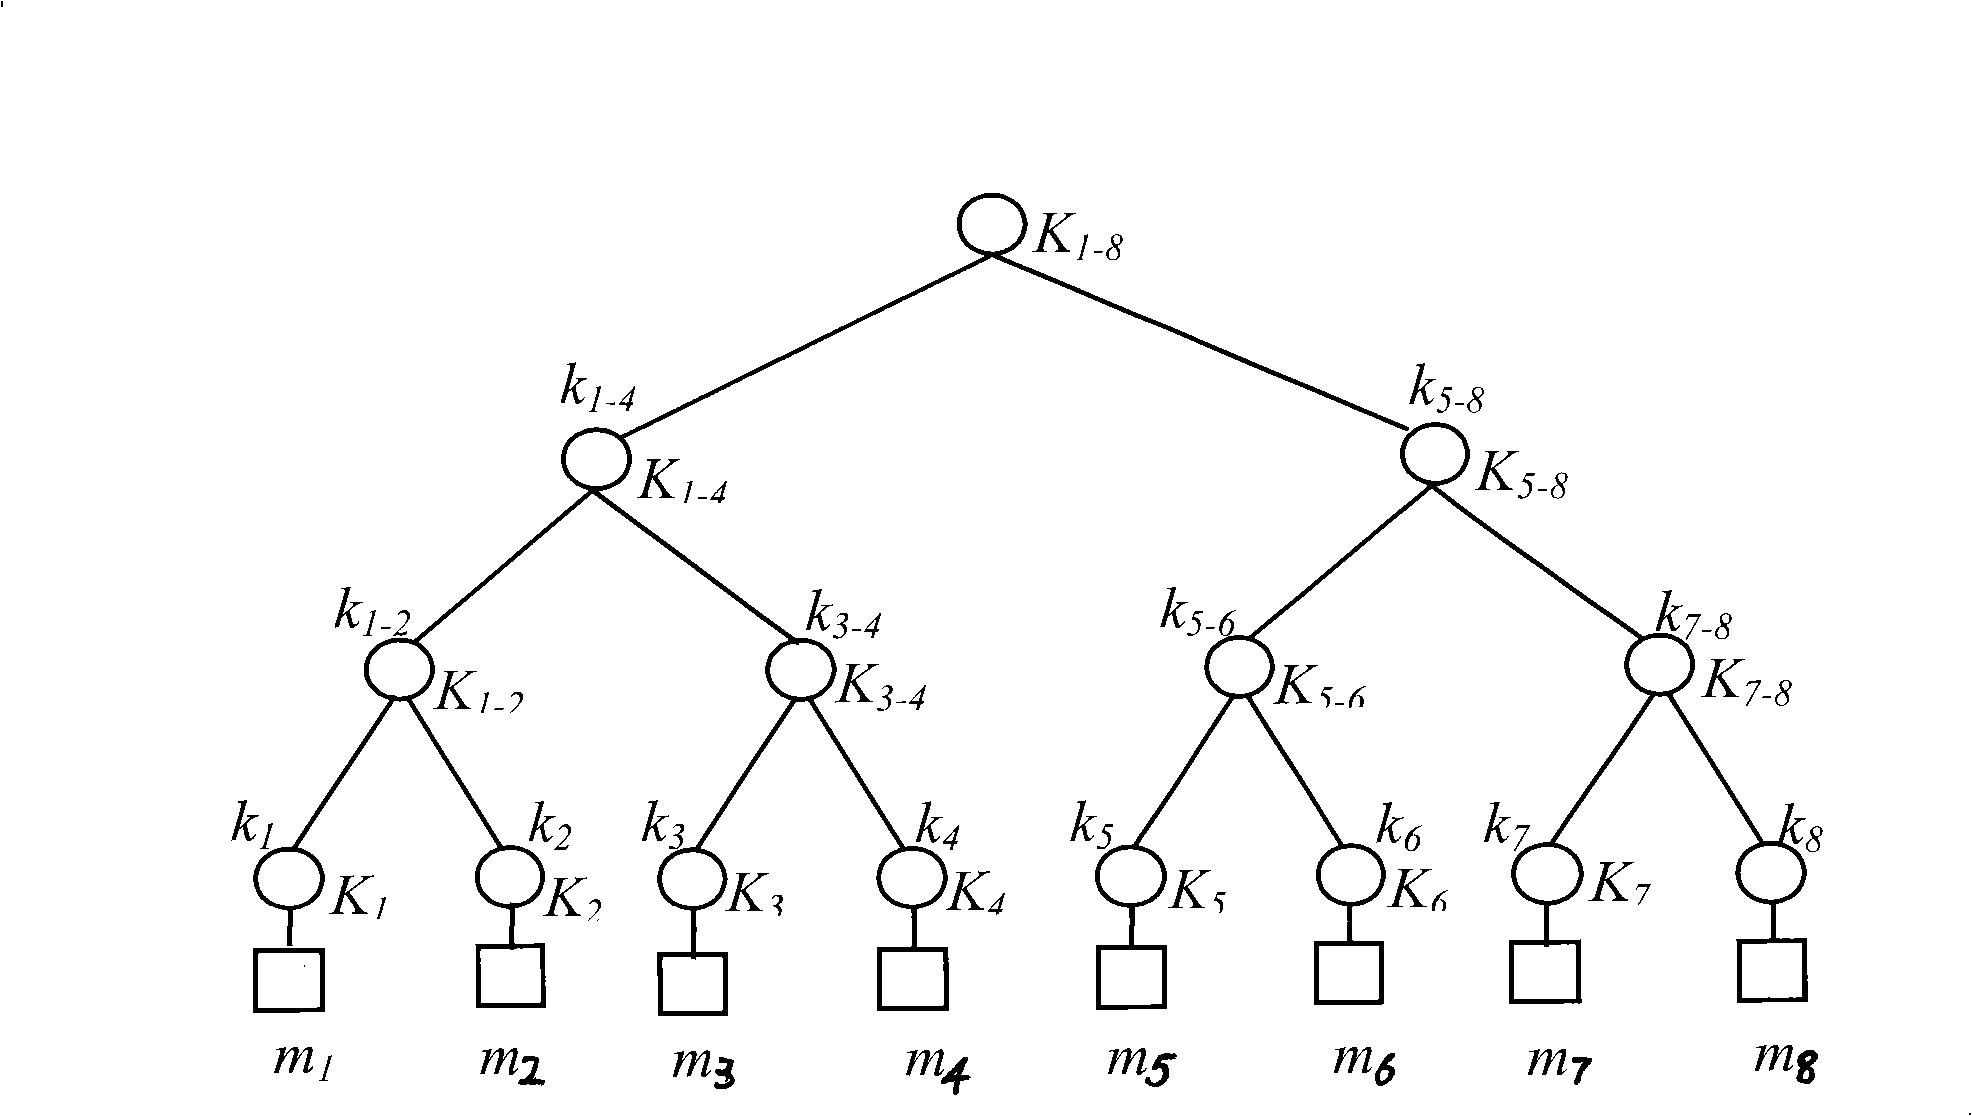 Uni-directional function tree multicast key management method based on cipher sharing